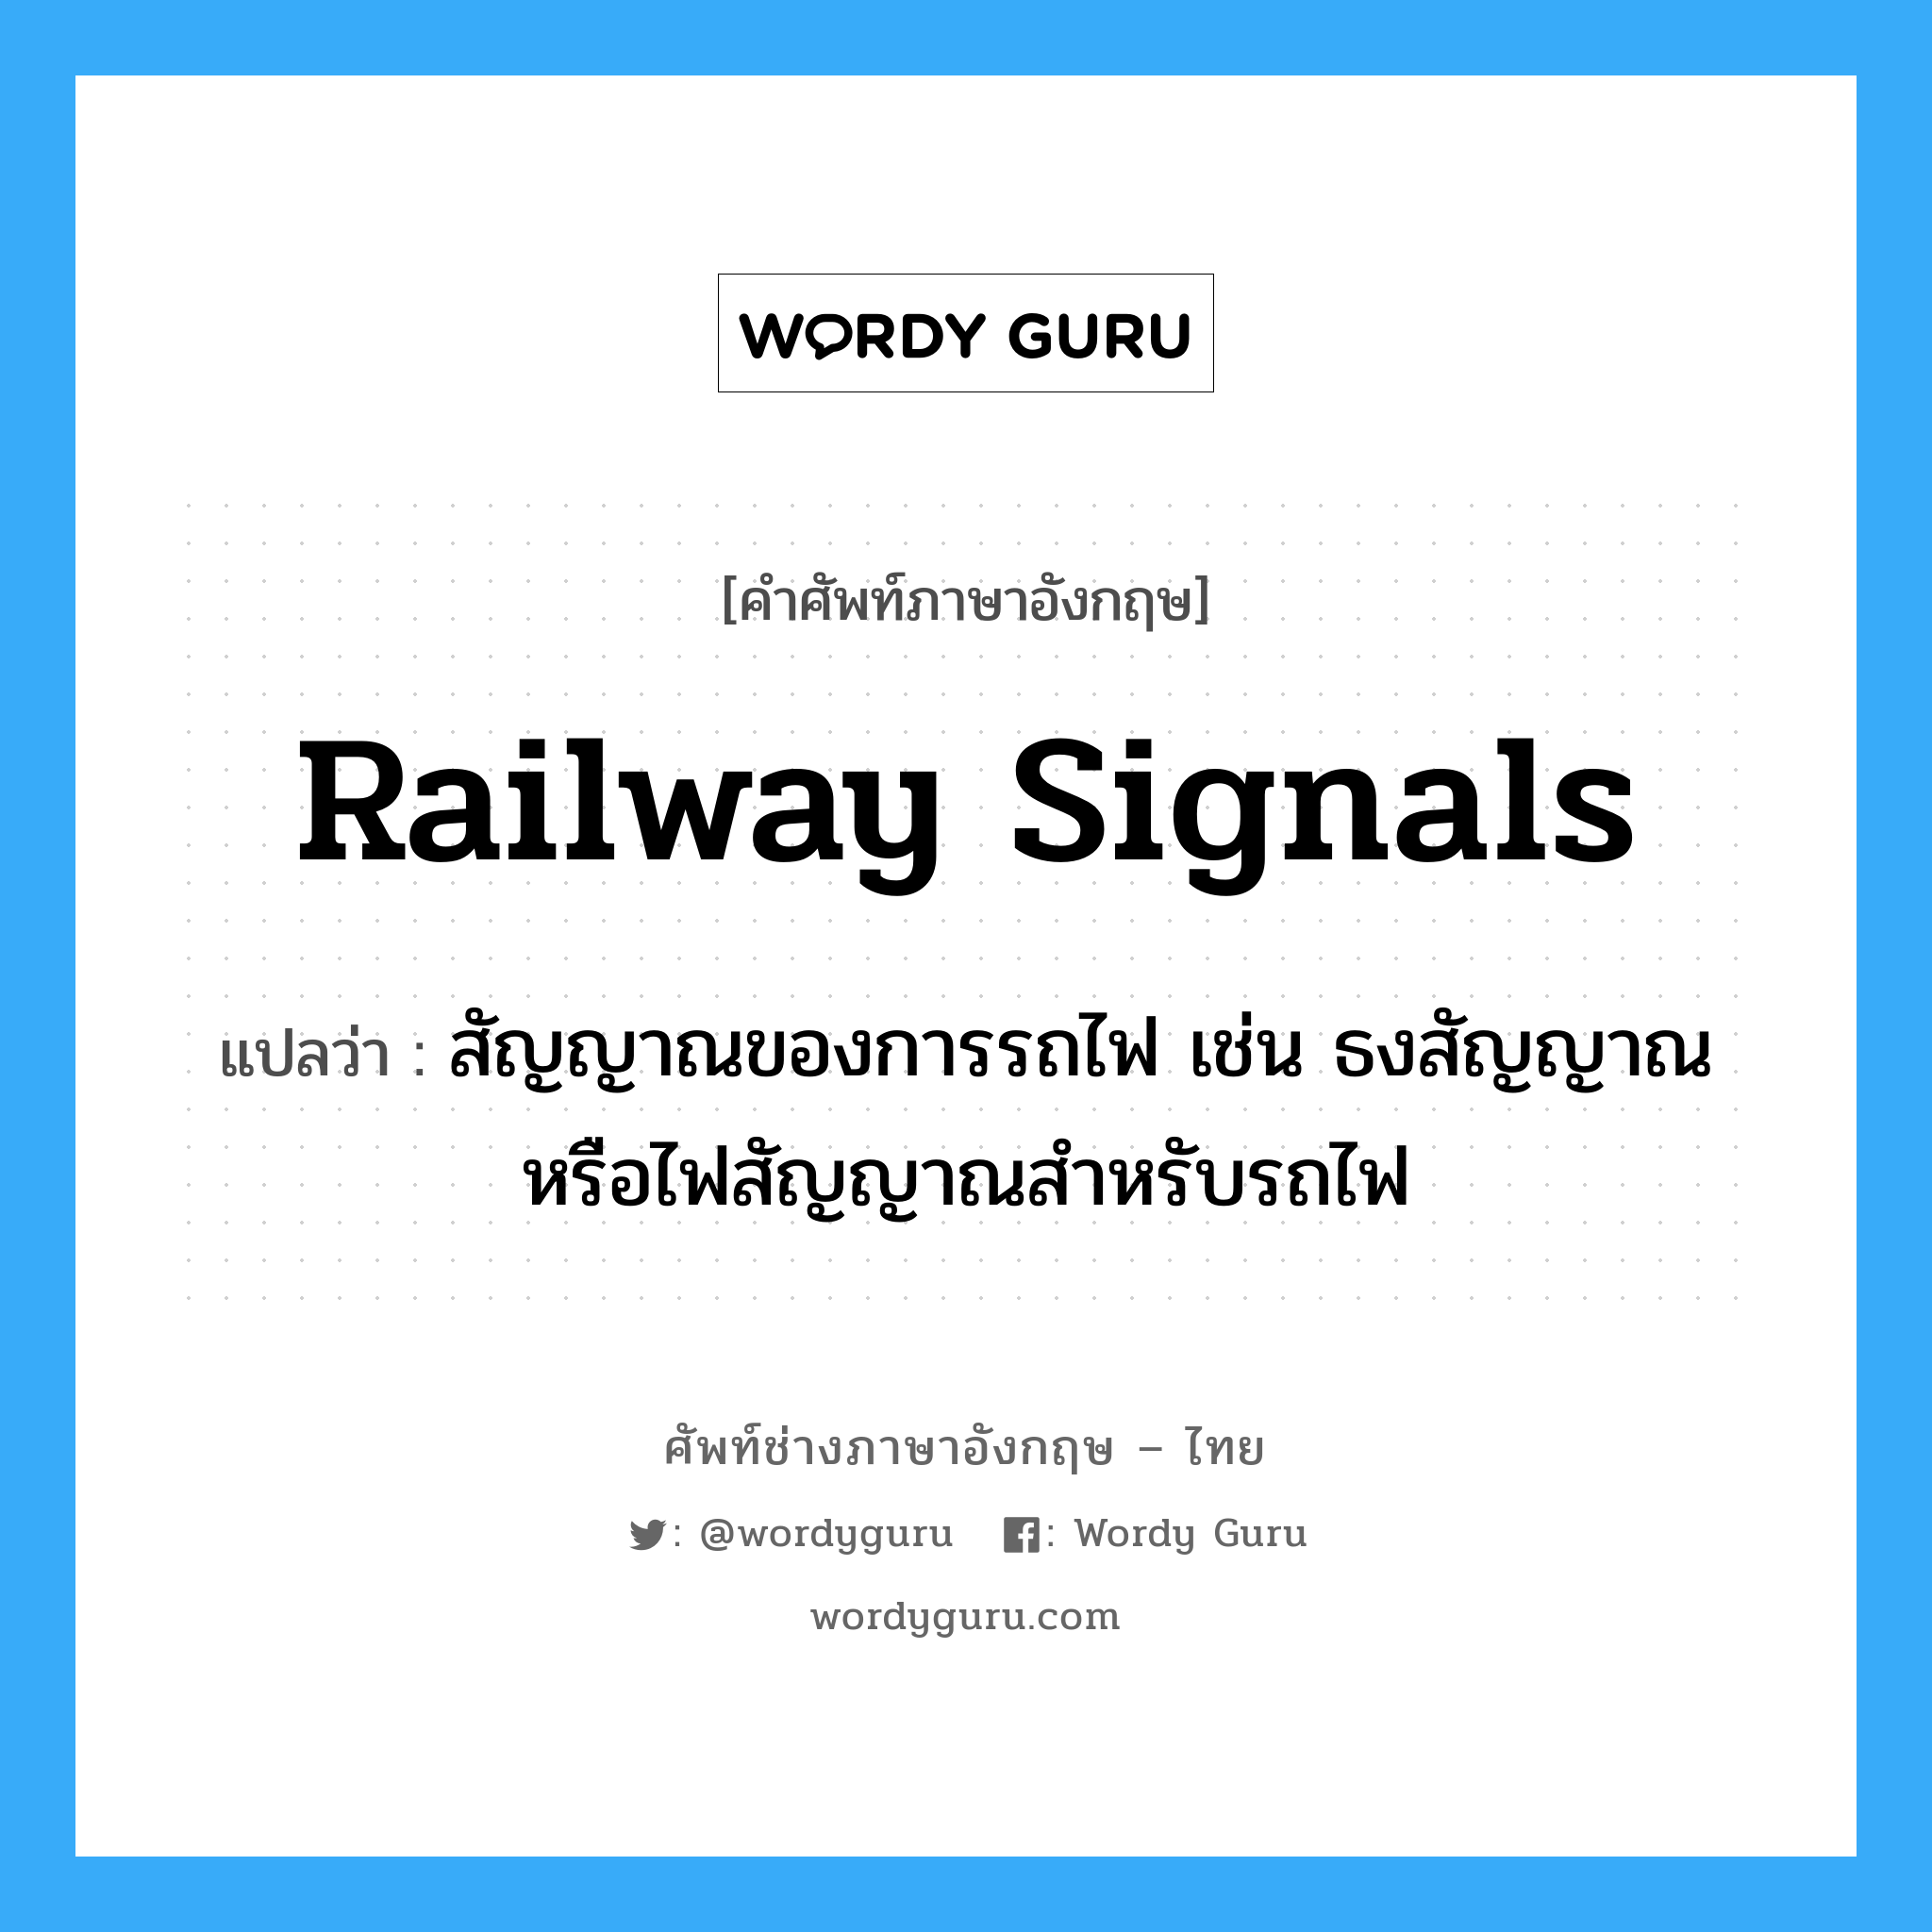 railway signals แปลว่า?, คำศัพท์ช่างภาษาอังกฤษ - ไทย railway signals คำศัพท์ภาษาอังกฤษ railway signals แปลว่า สัญญาณของการรถไฟ เช่น ธงสัญญาณหรือไฟสัญญาณสำหรับรถไฟ